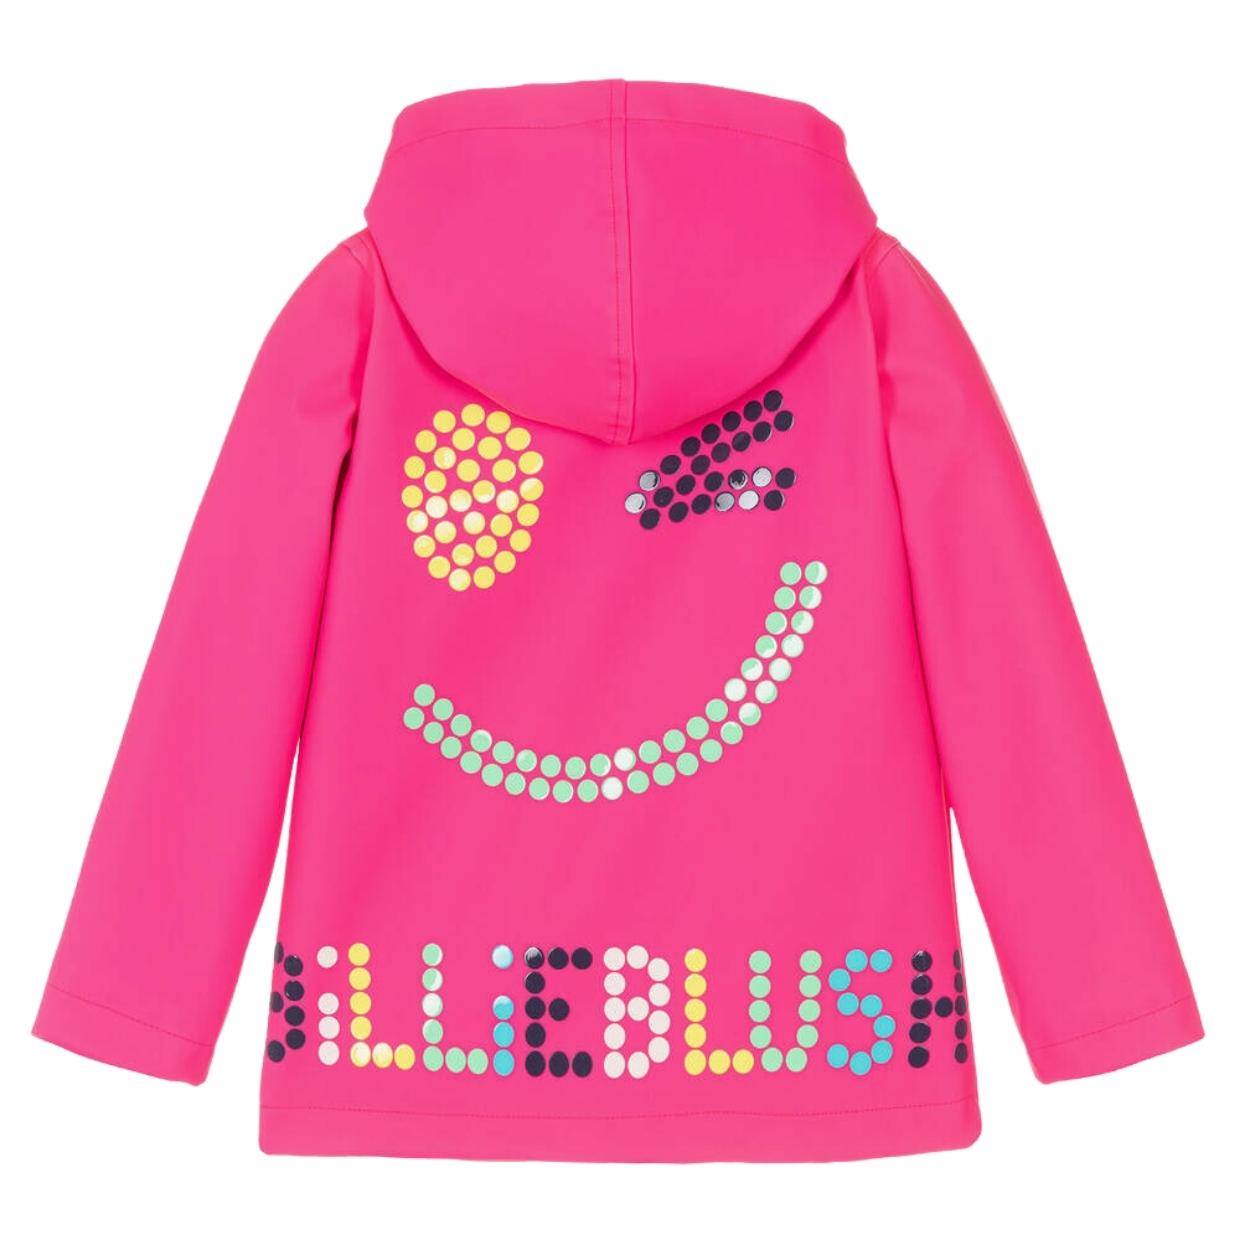 Billieblush Pink Matt Coated Hooded Raincoat